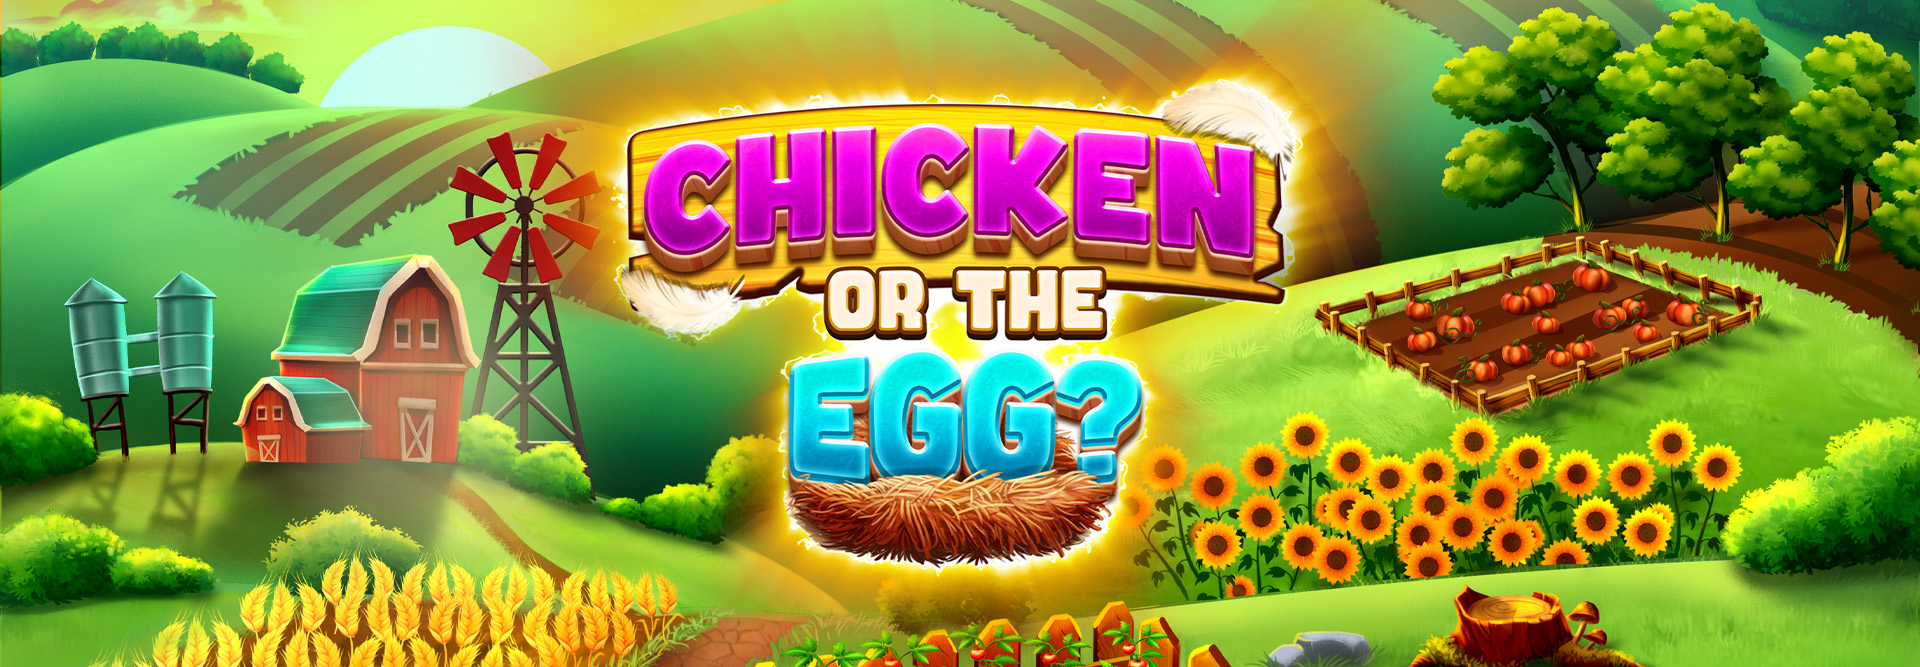 Chicken or the egg logo